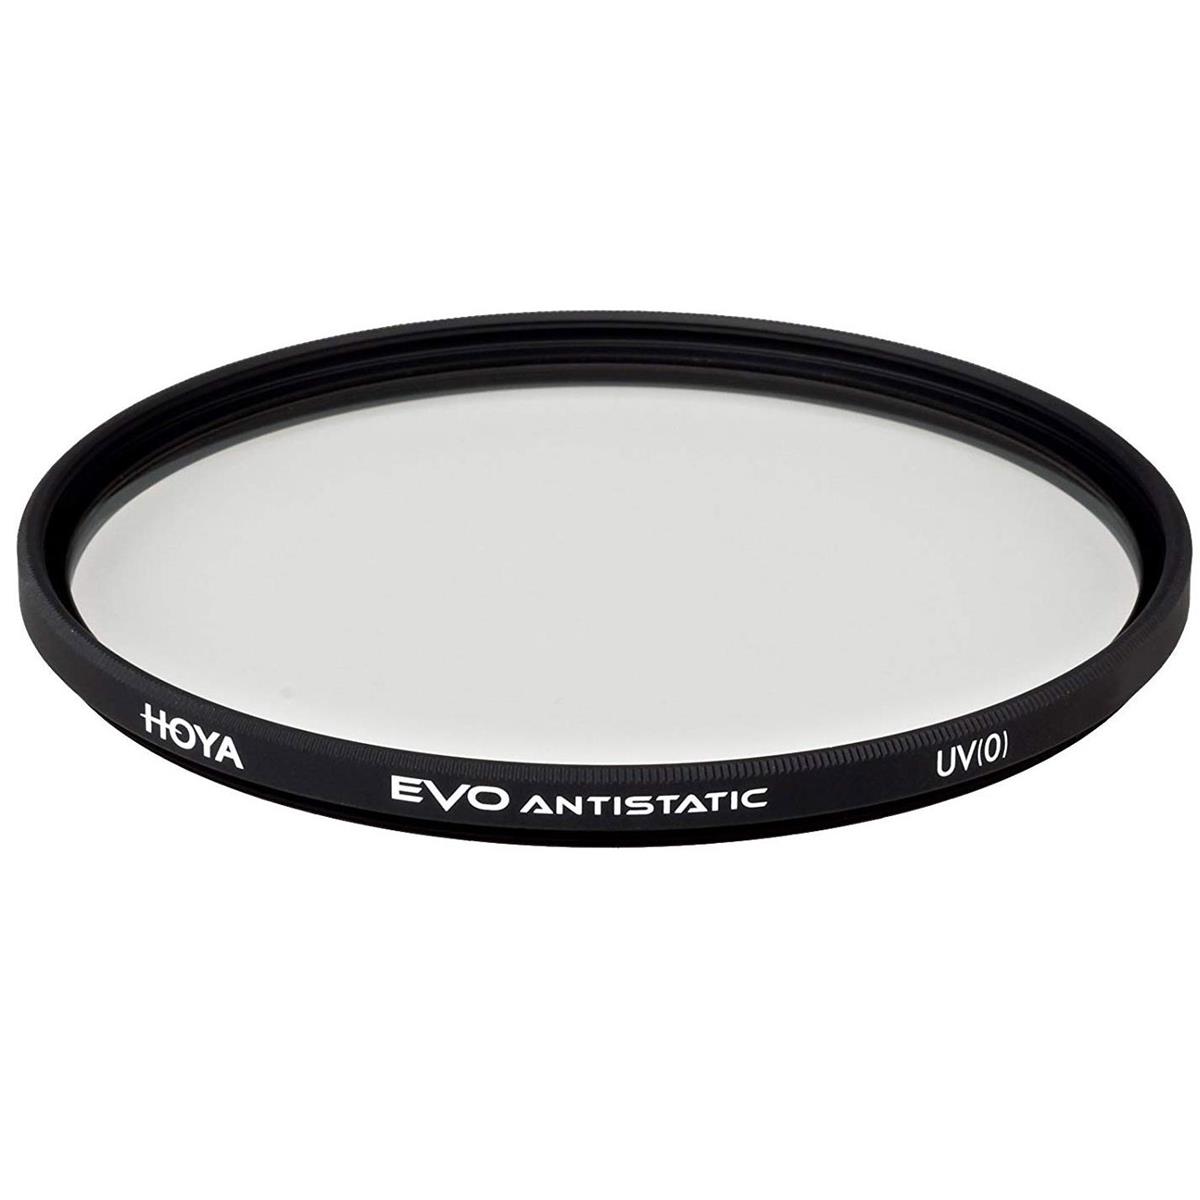 Hoya Evo Antistatic UV Filter - 62mm цена и фото